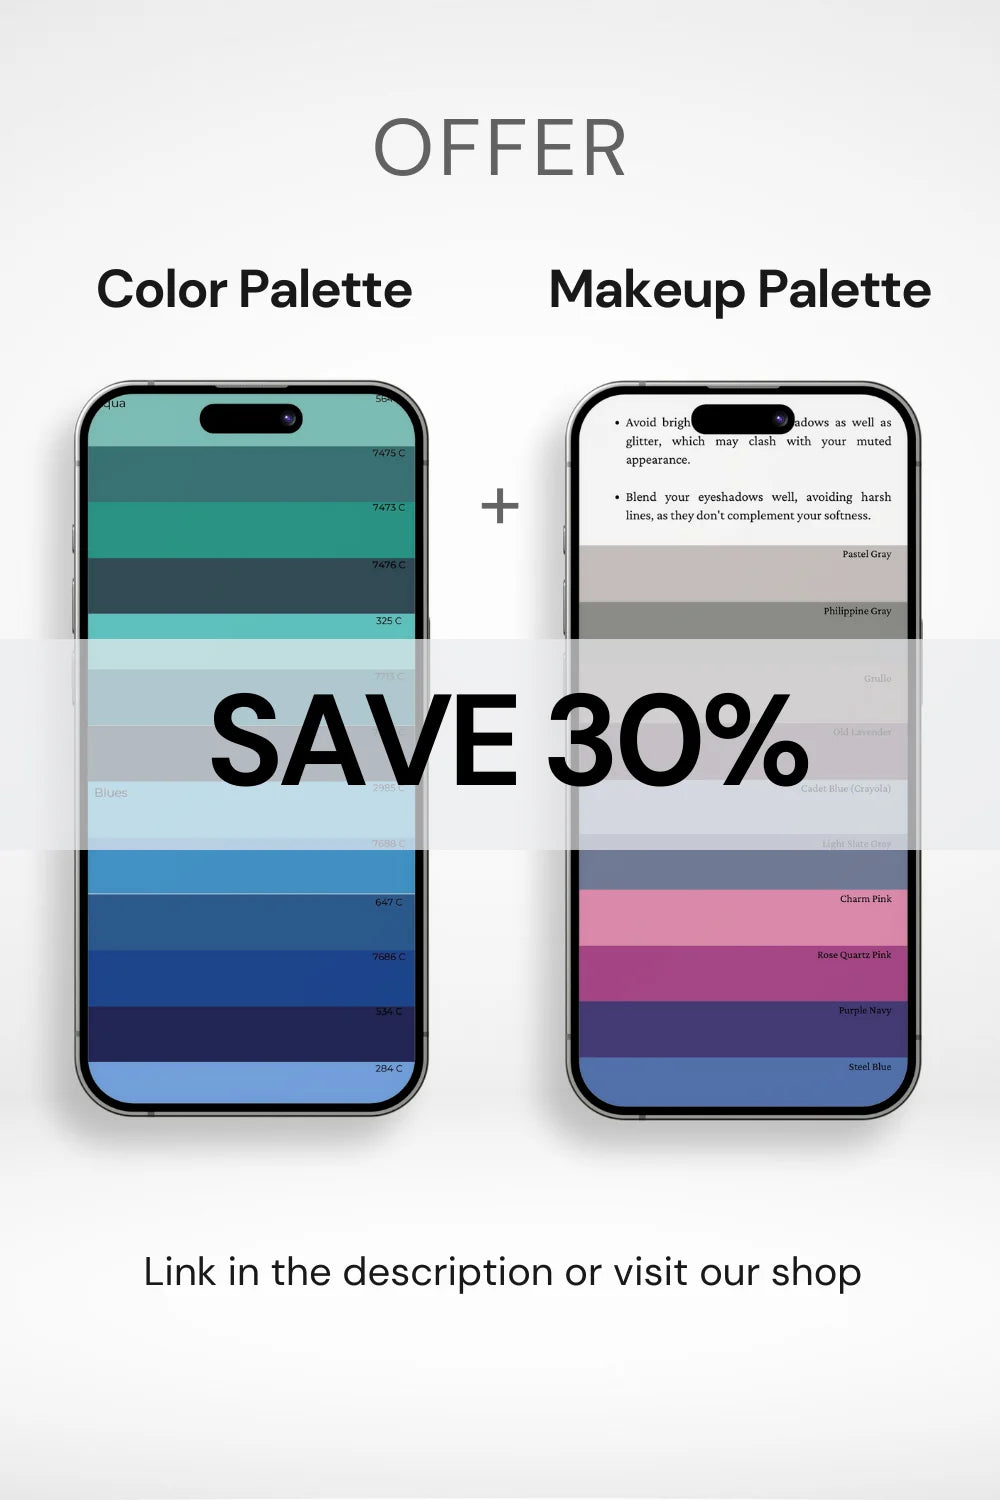 Offer: 30% off on color & makeup palettes. 'SAVE 30%' in bold.